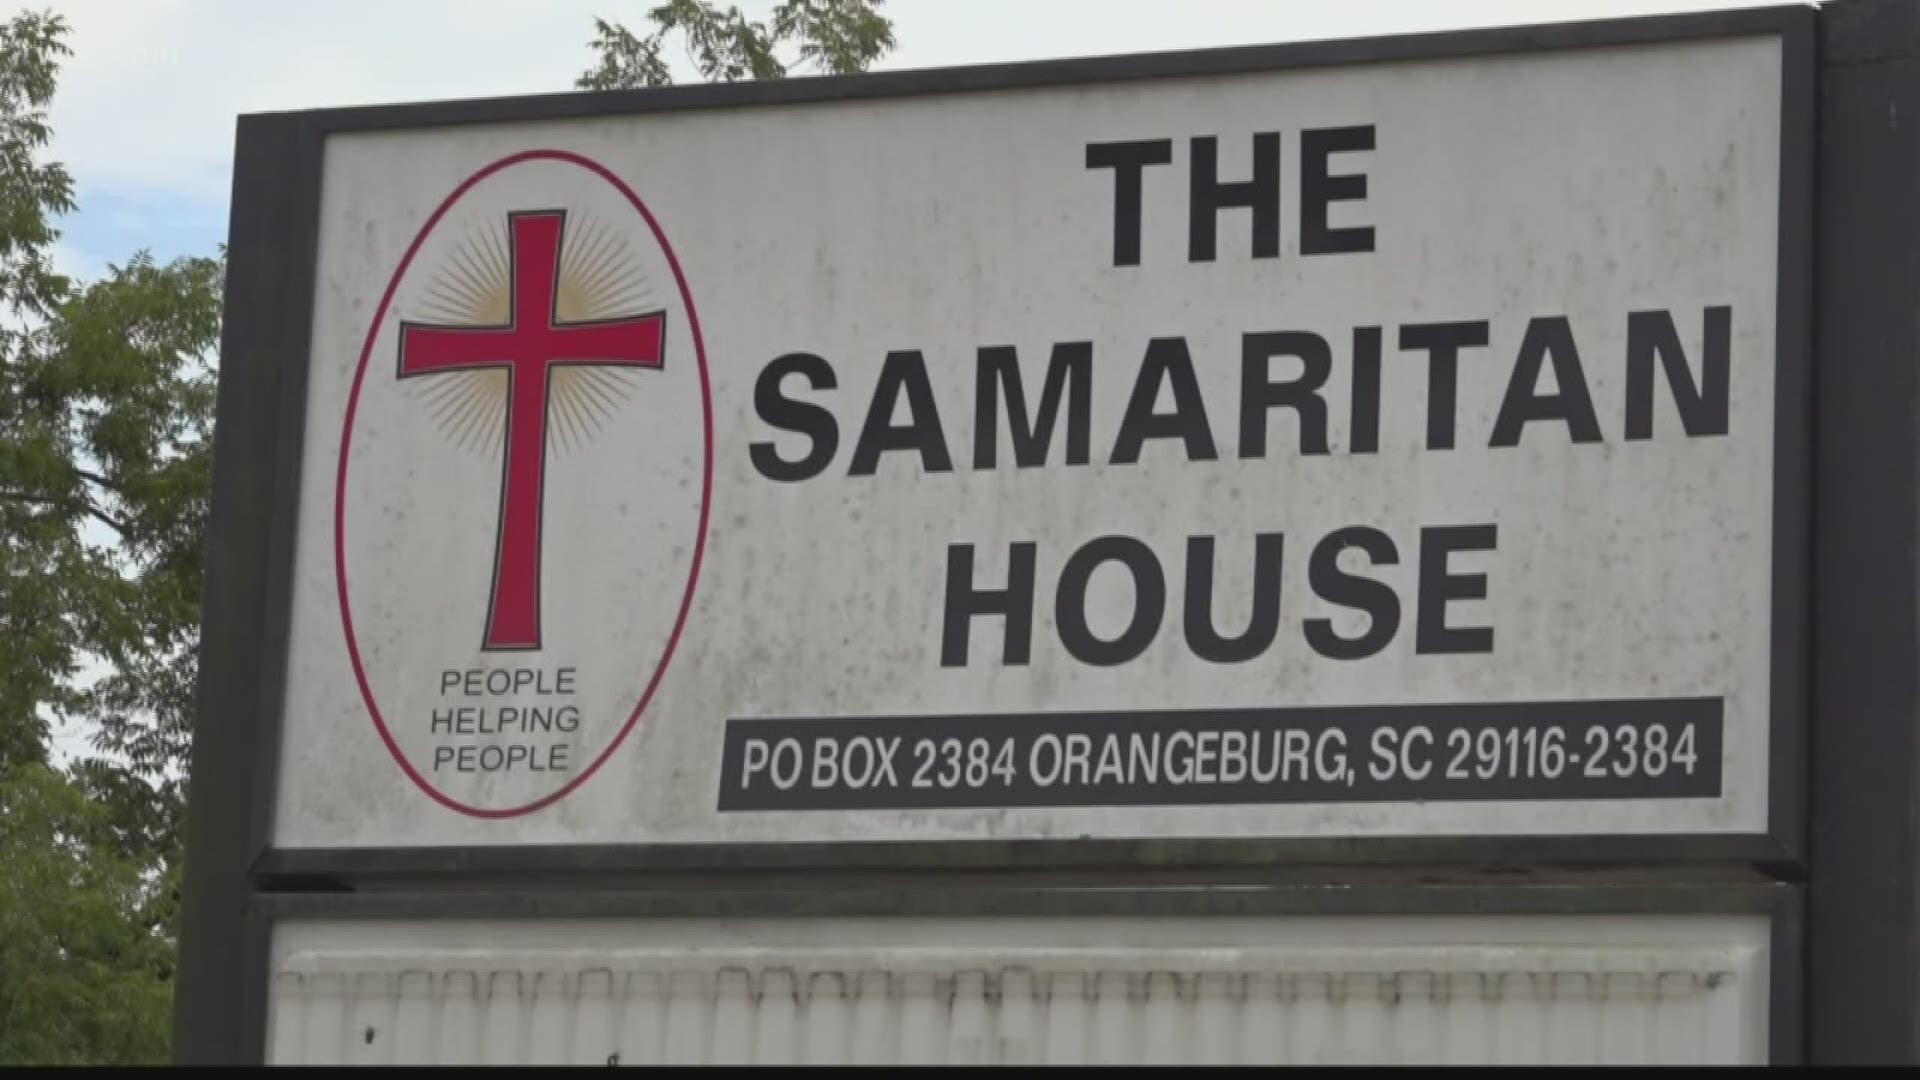 The statewide response to the coronavirus is delaying the opening of the Samaritan House in Orangeburg.